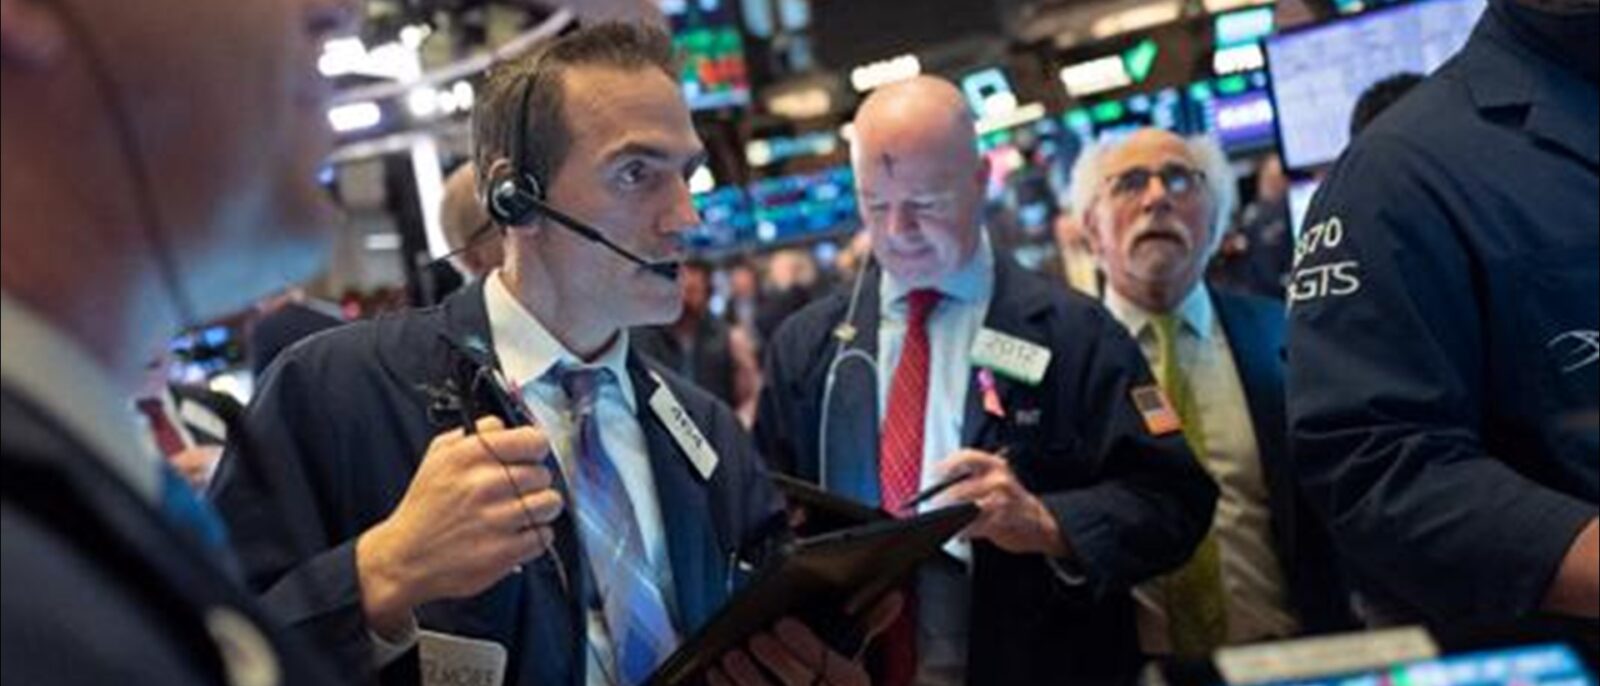 HU Professor discusses stock market volatility with FOX43 News